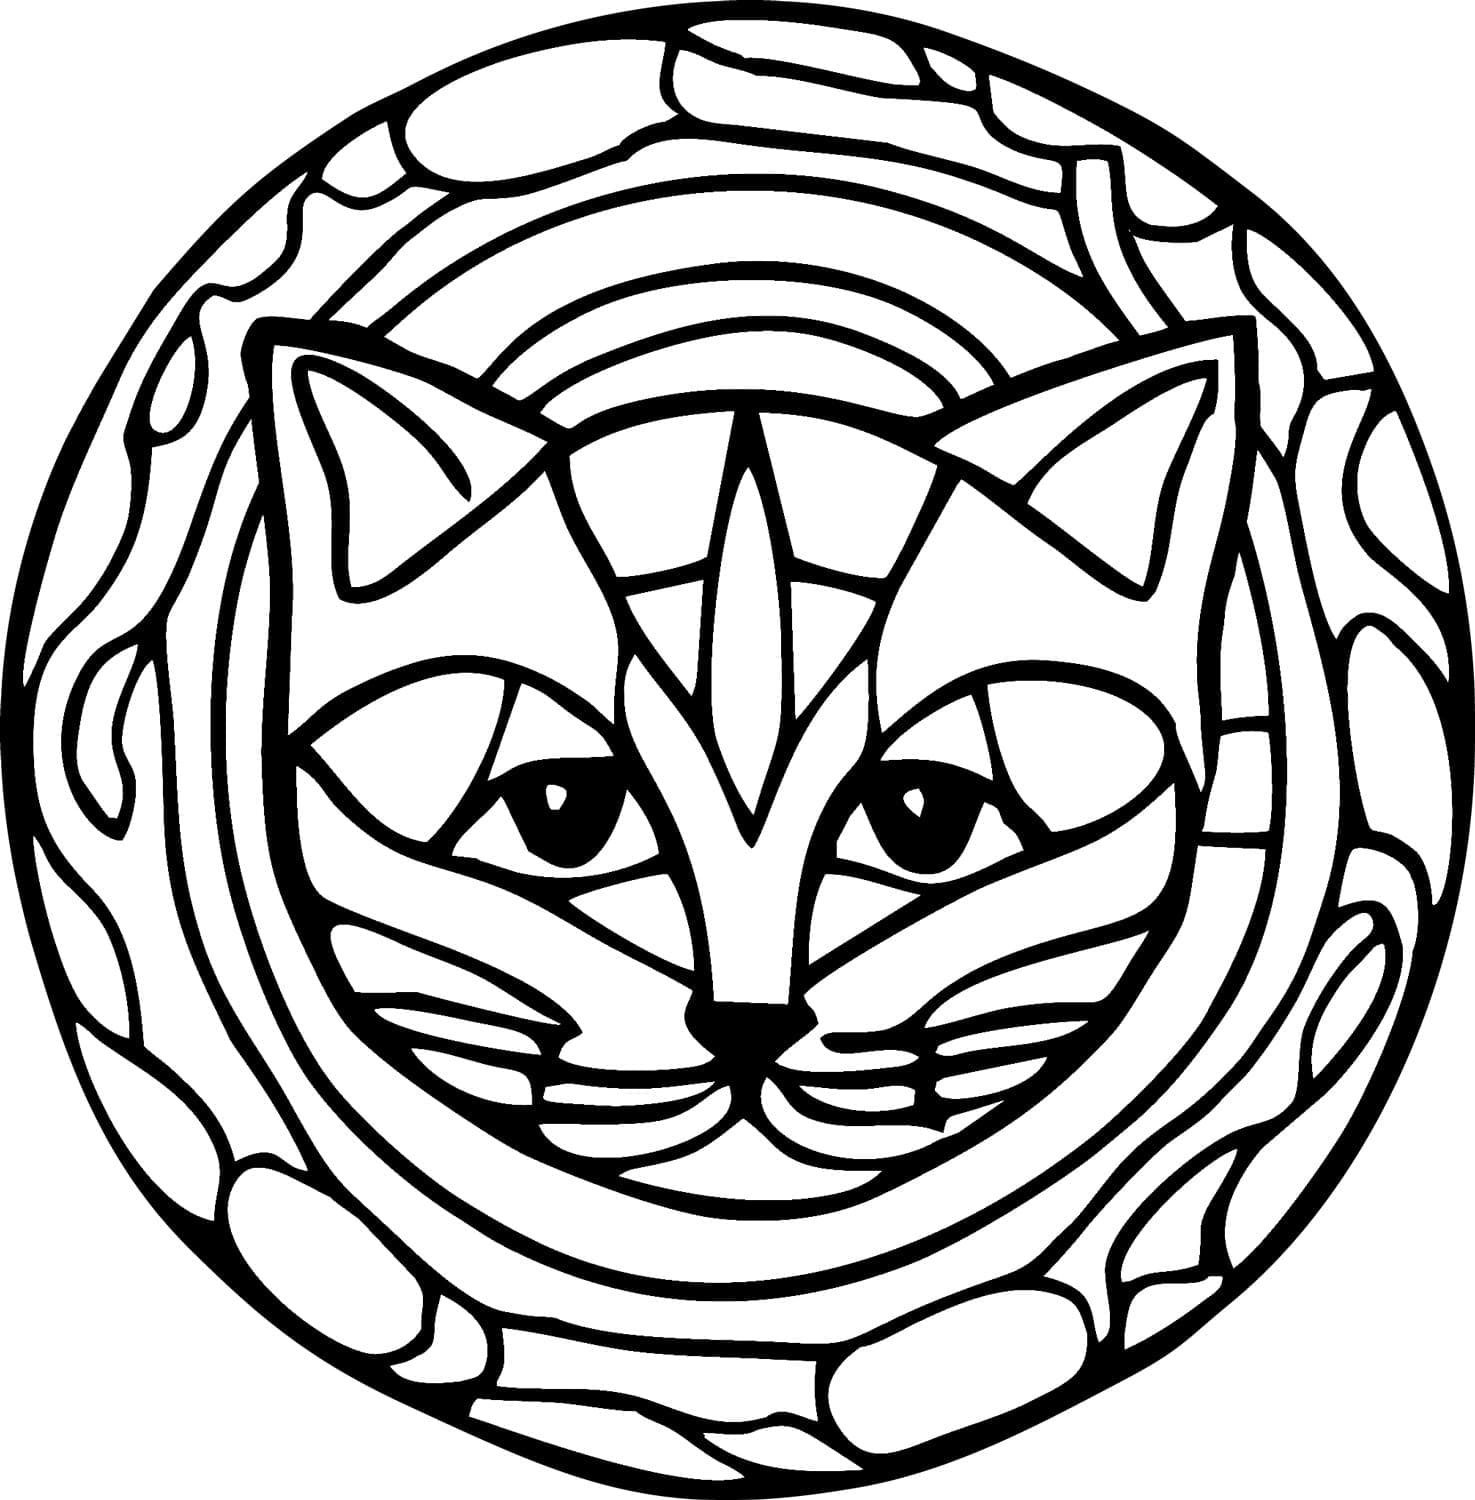 Simple Mandala With Cat Coloring Page Mandala